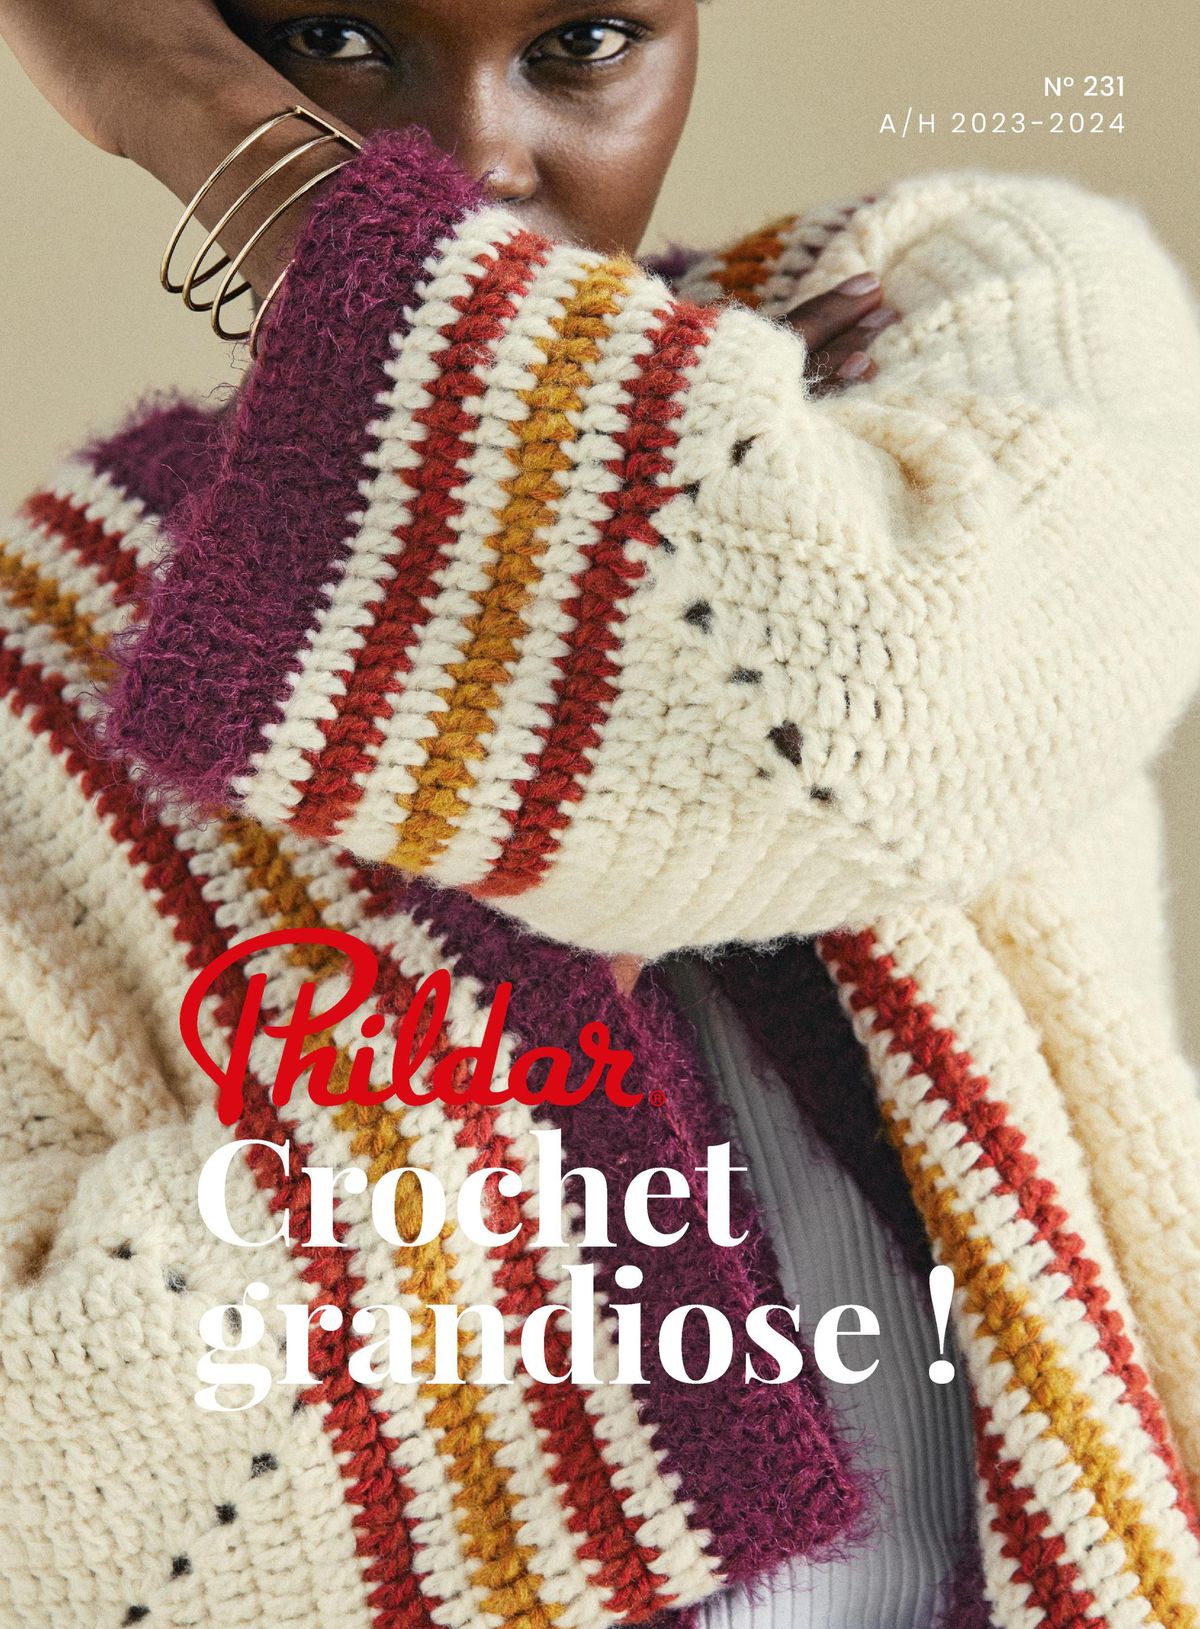 Catalogue Crochet grandiose !, page 00001